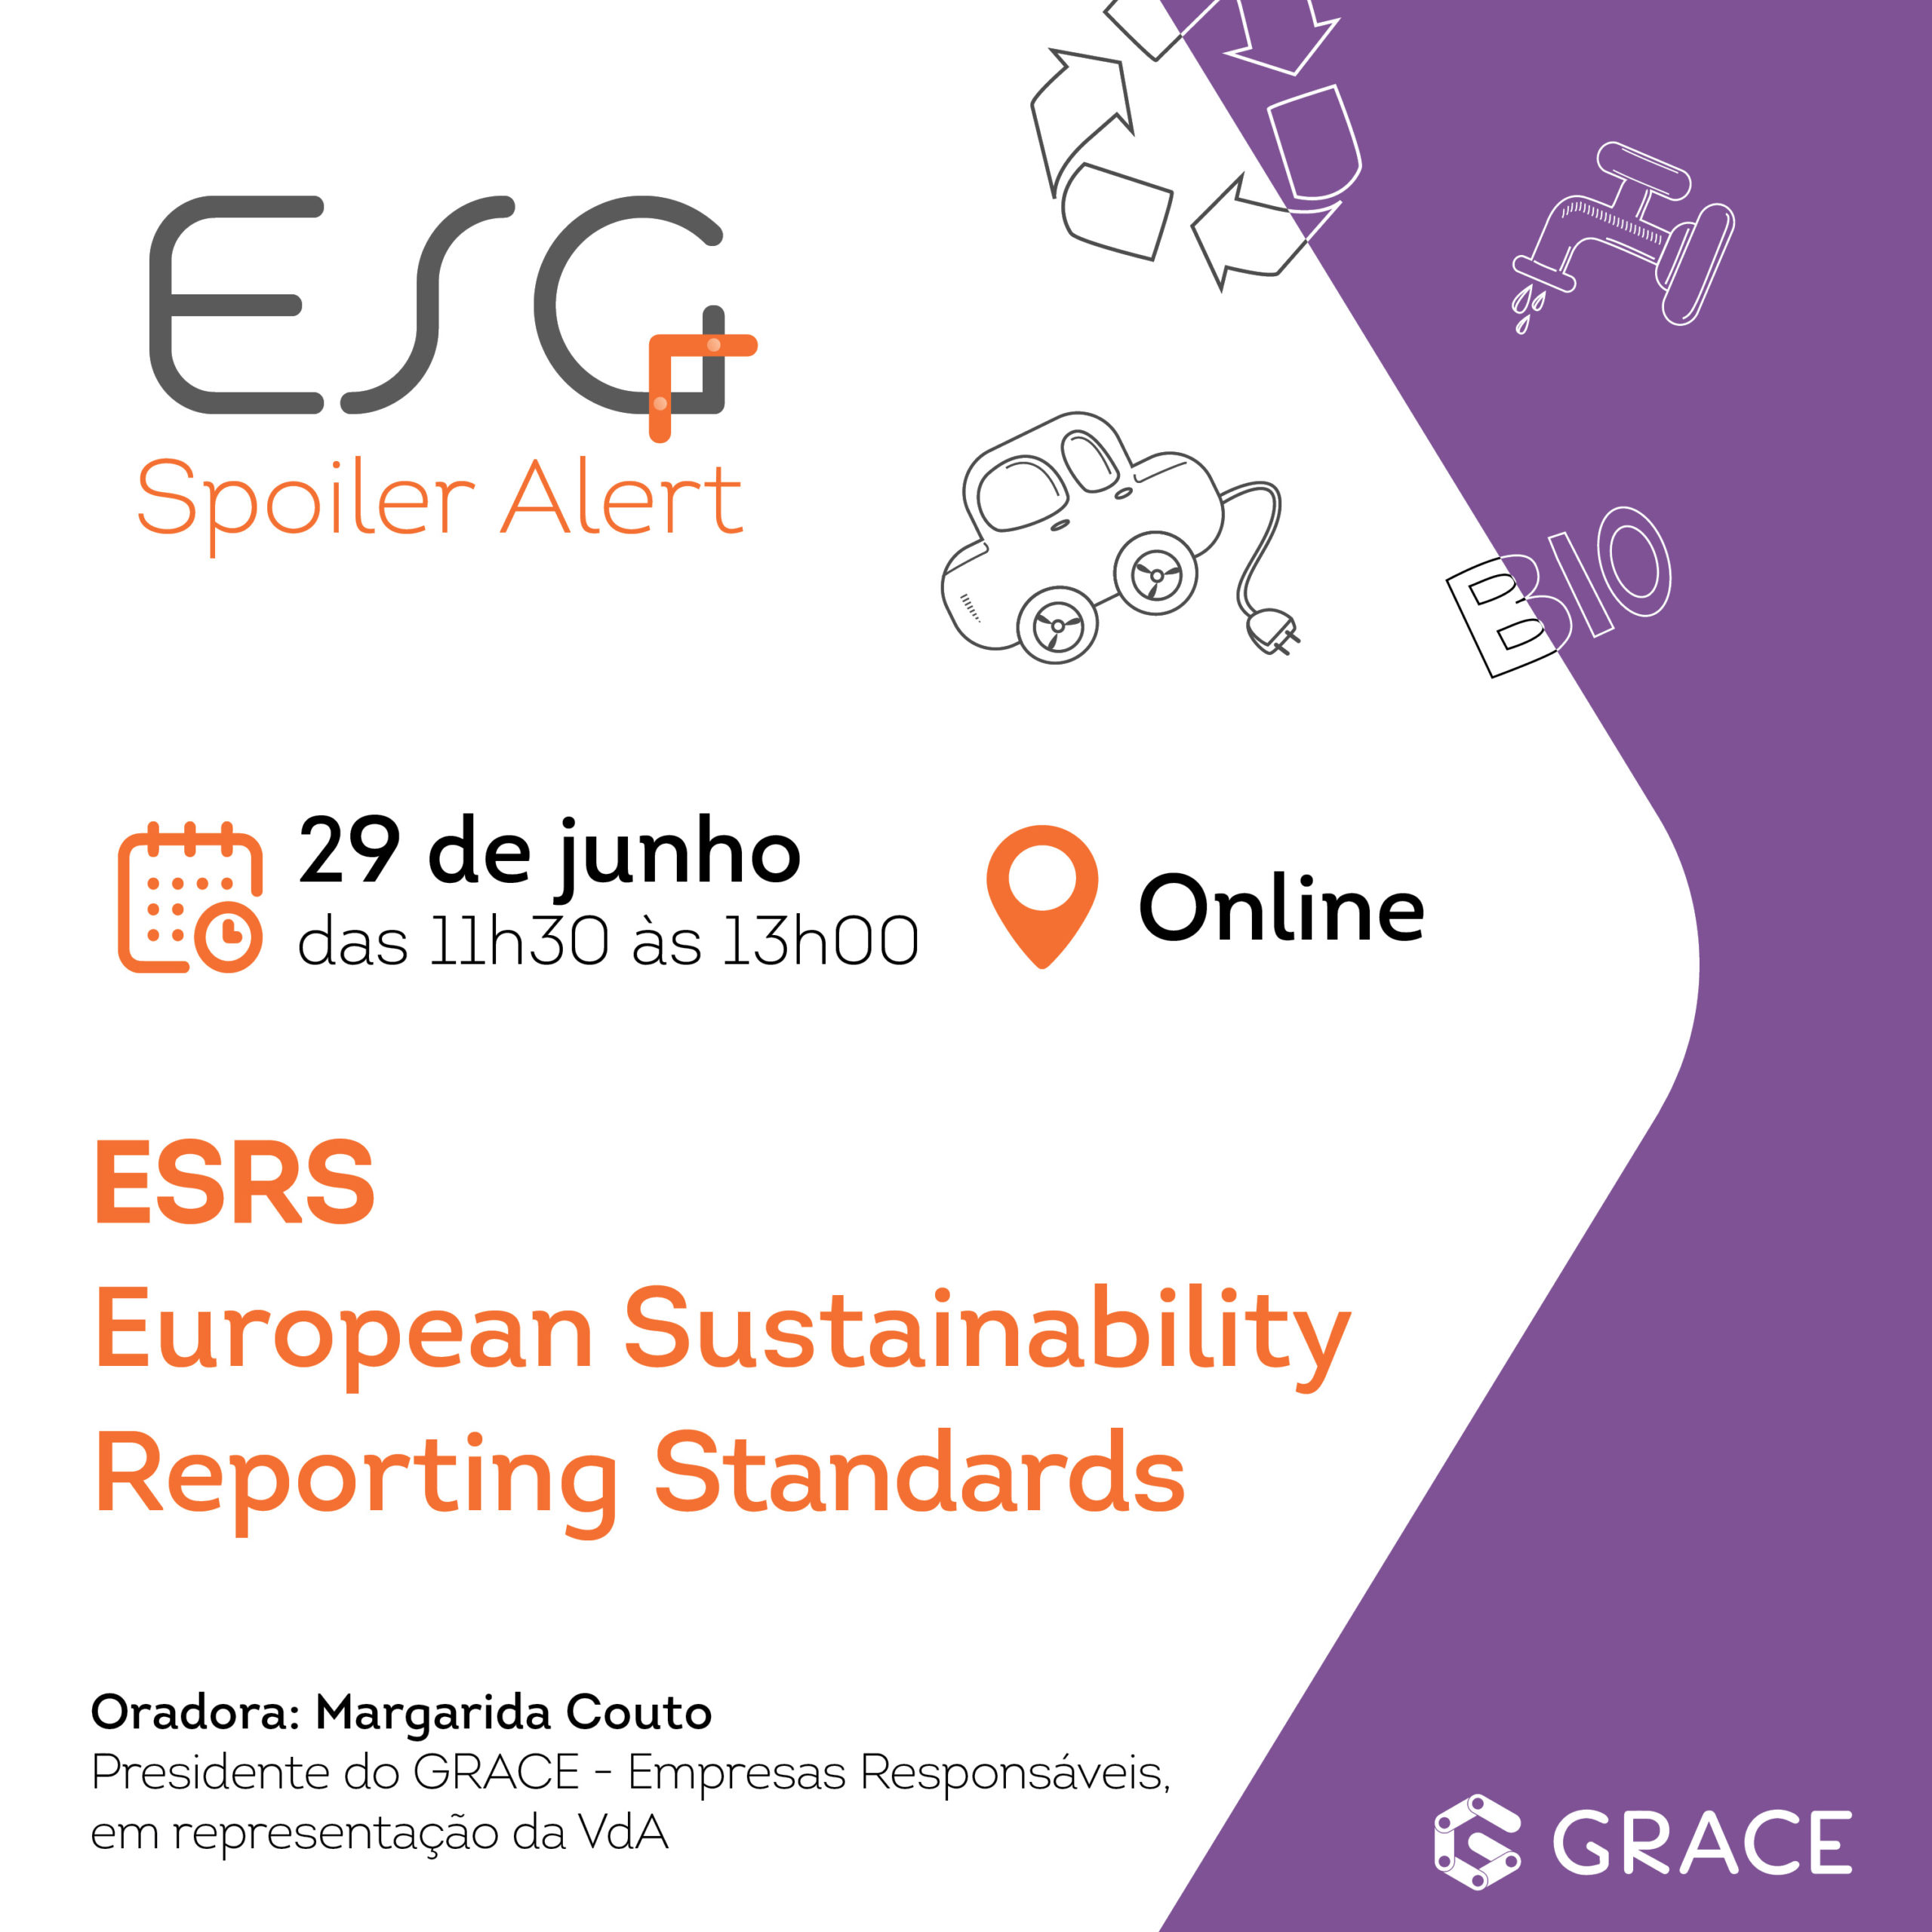 ESG Spoiler Alert | ESRS – European Sustainability Reporting Standards